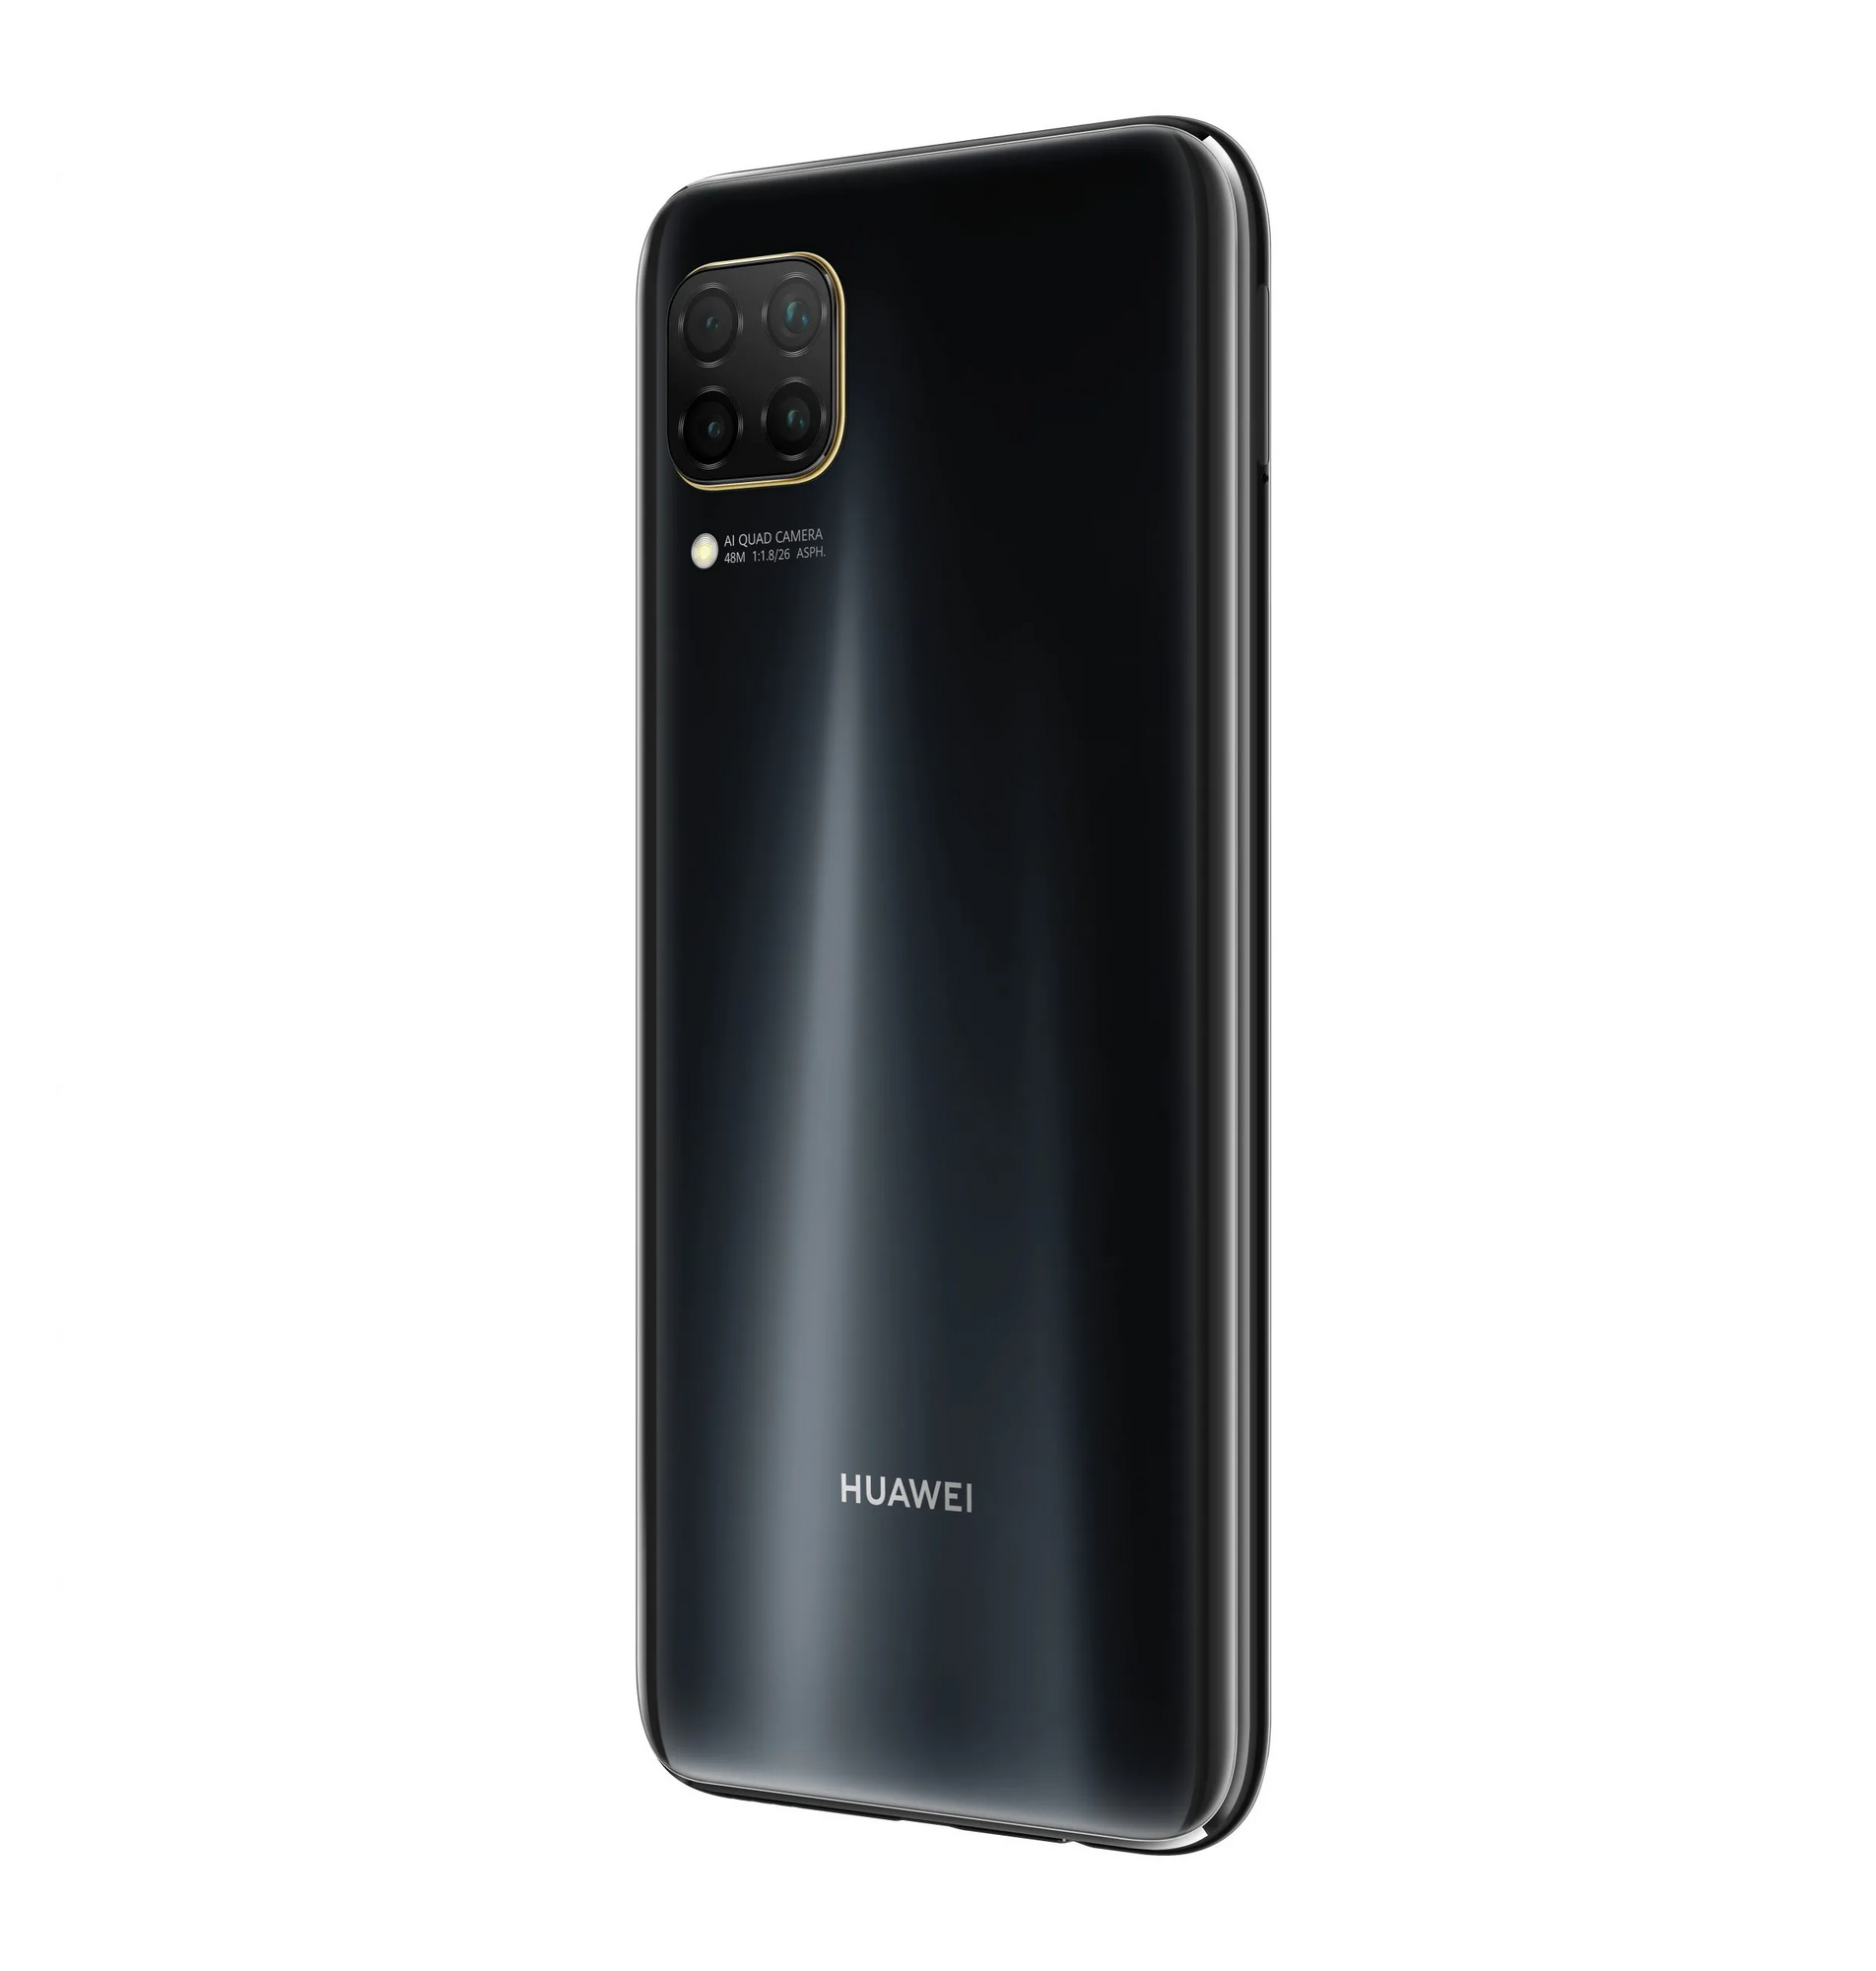 In arrivo Huawei P40 Lite con quattro fotocamere - NotebookCheck.it News